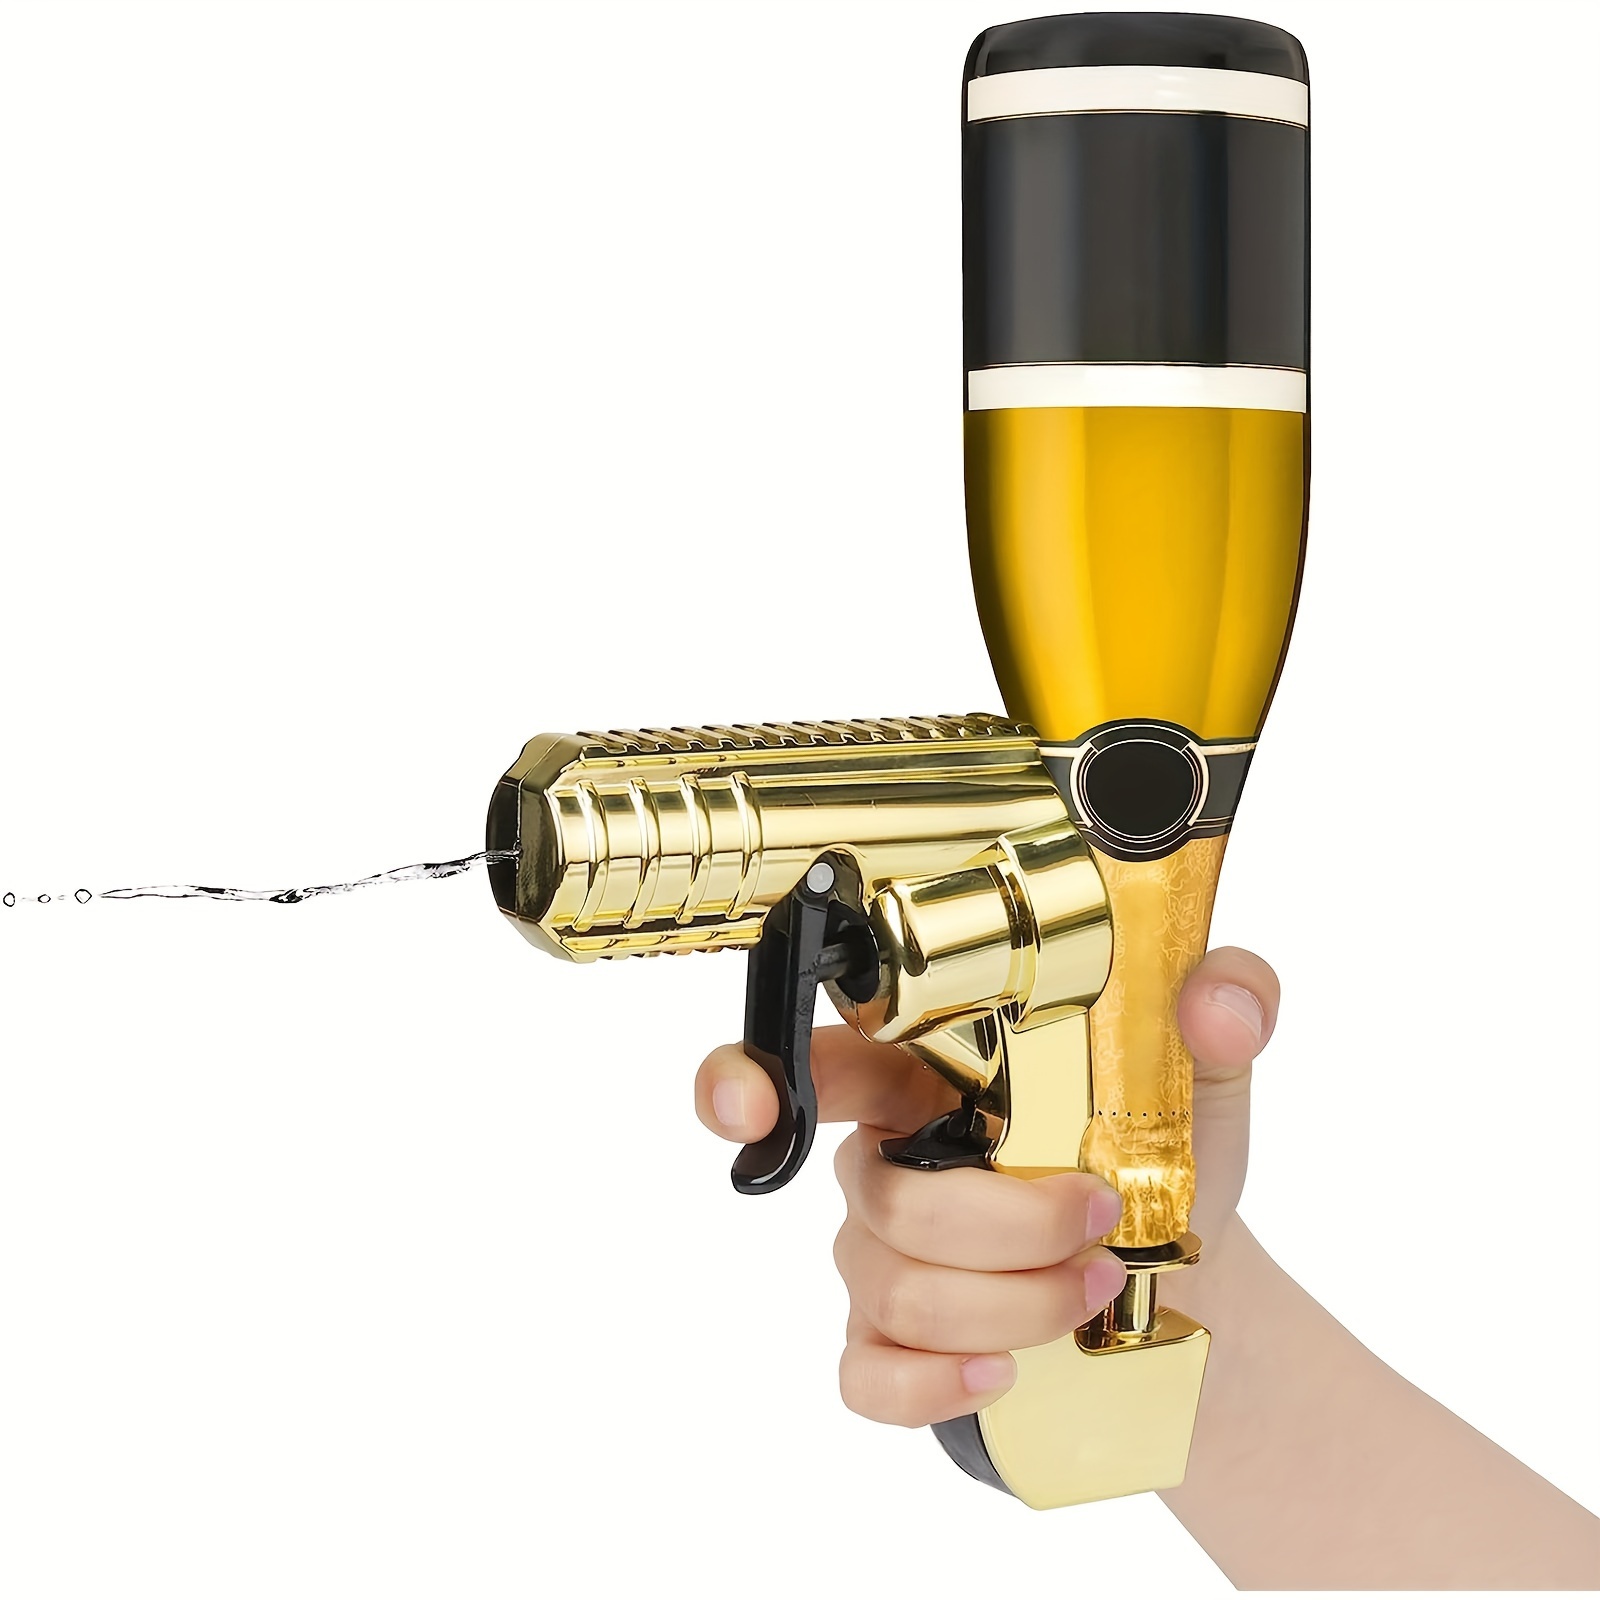  Champagne Gun Shooter,The 4th Generation Beer Gun